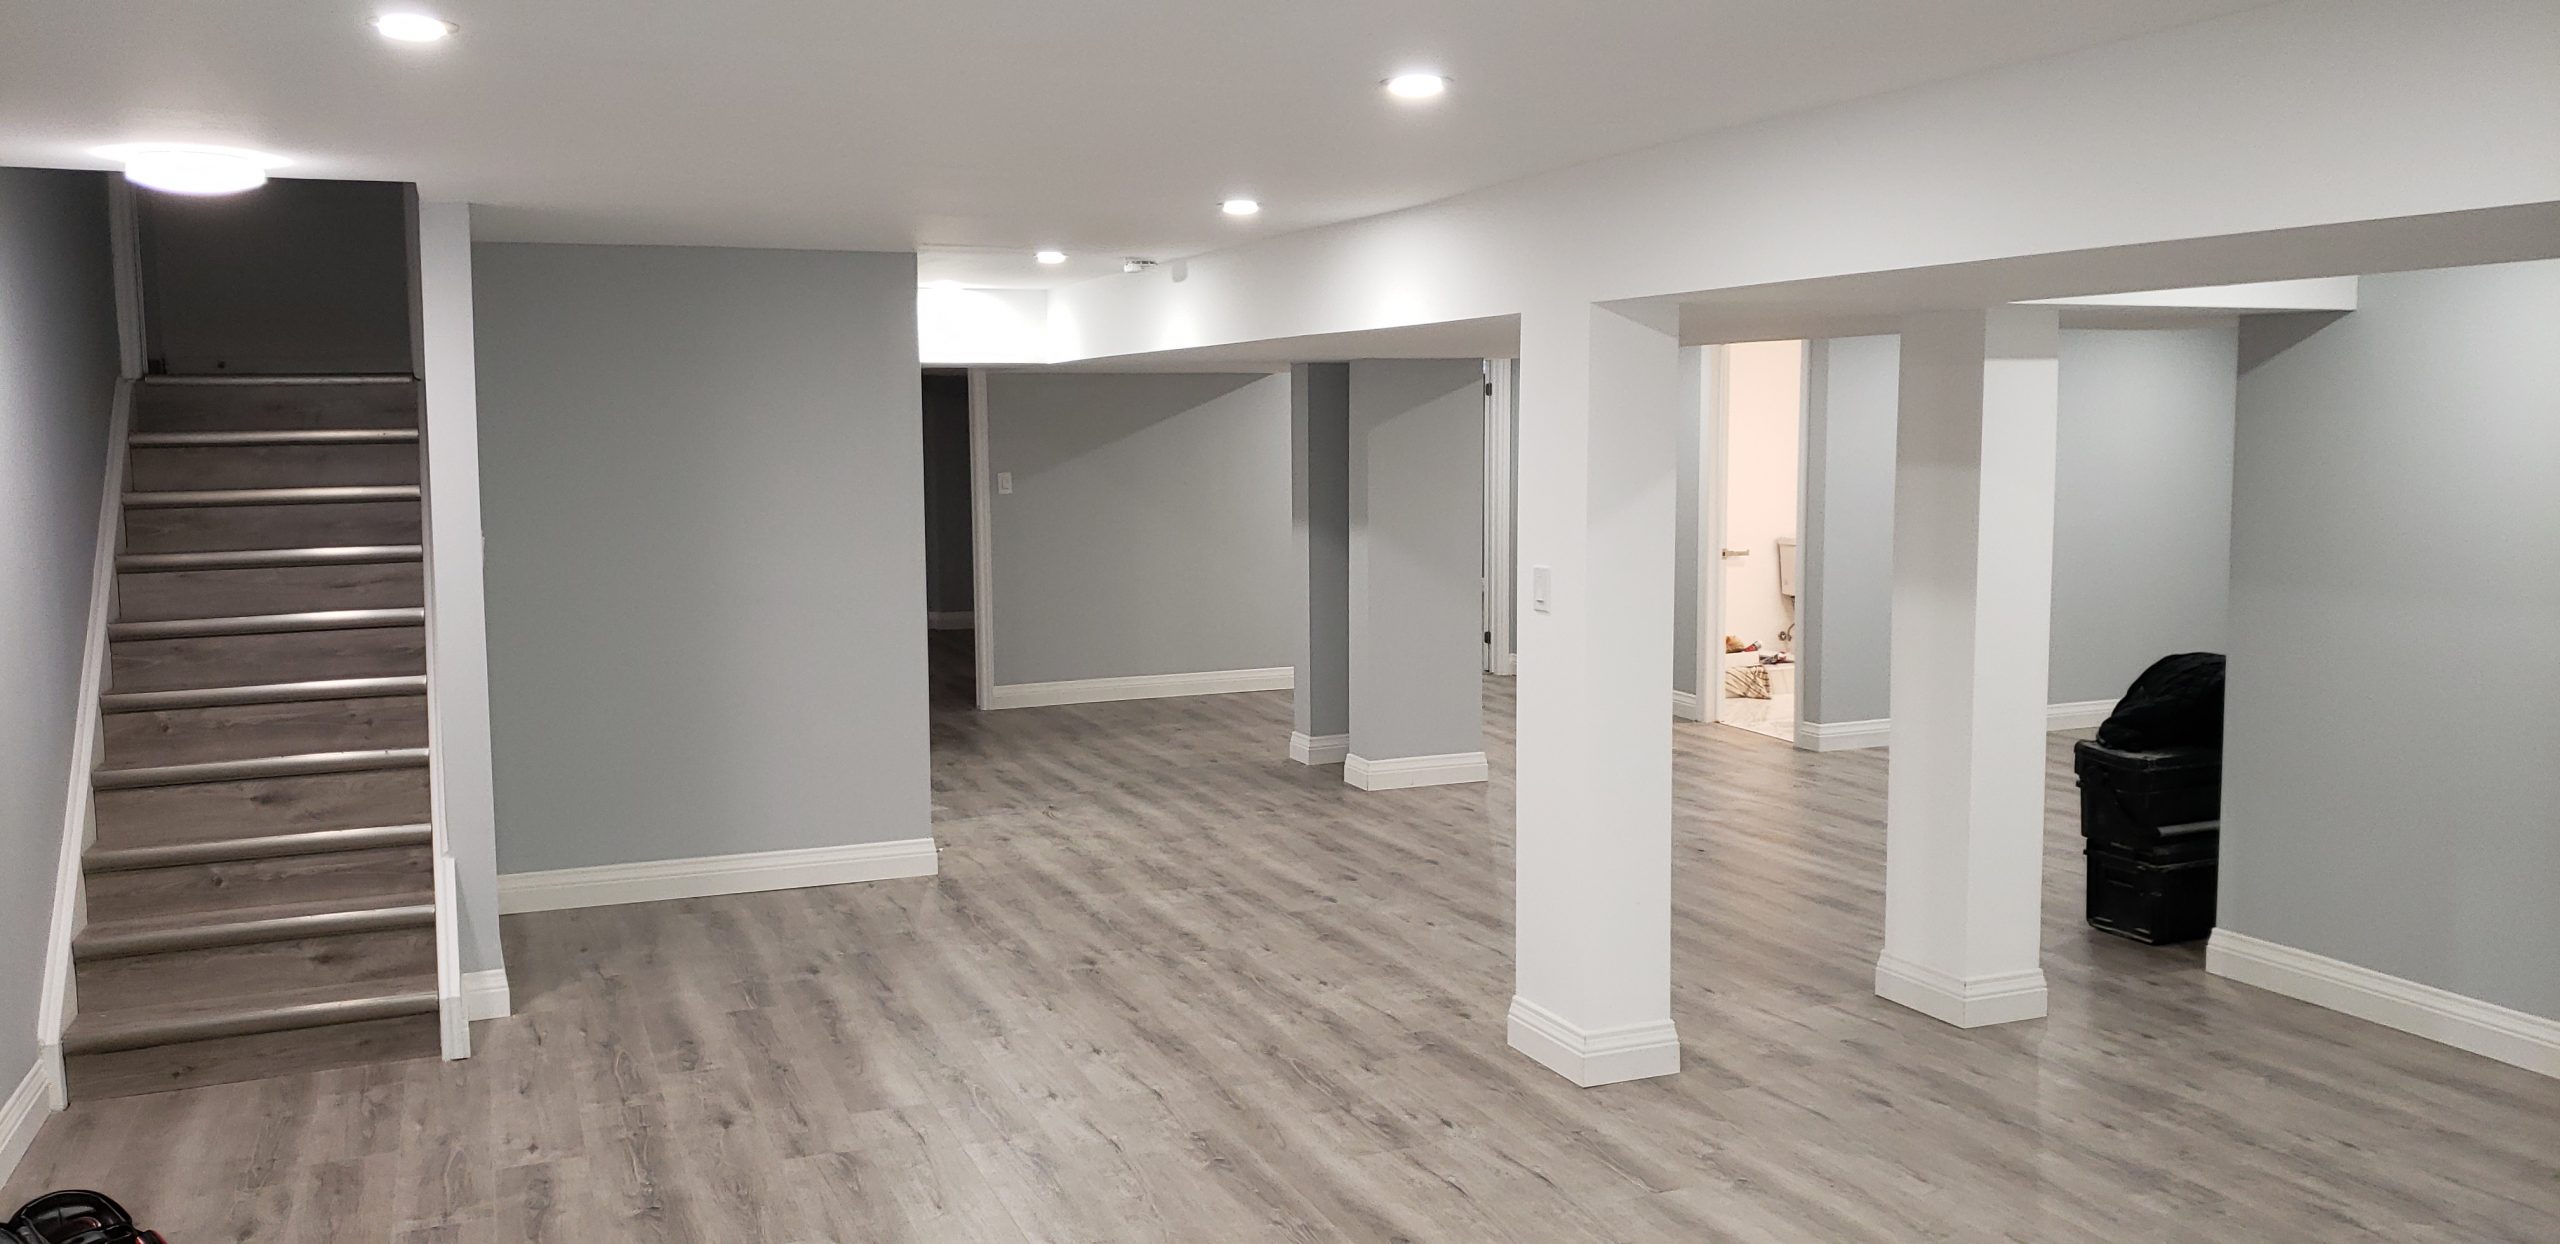 Complete basement renovations